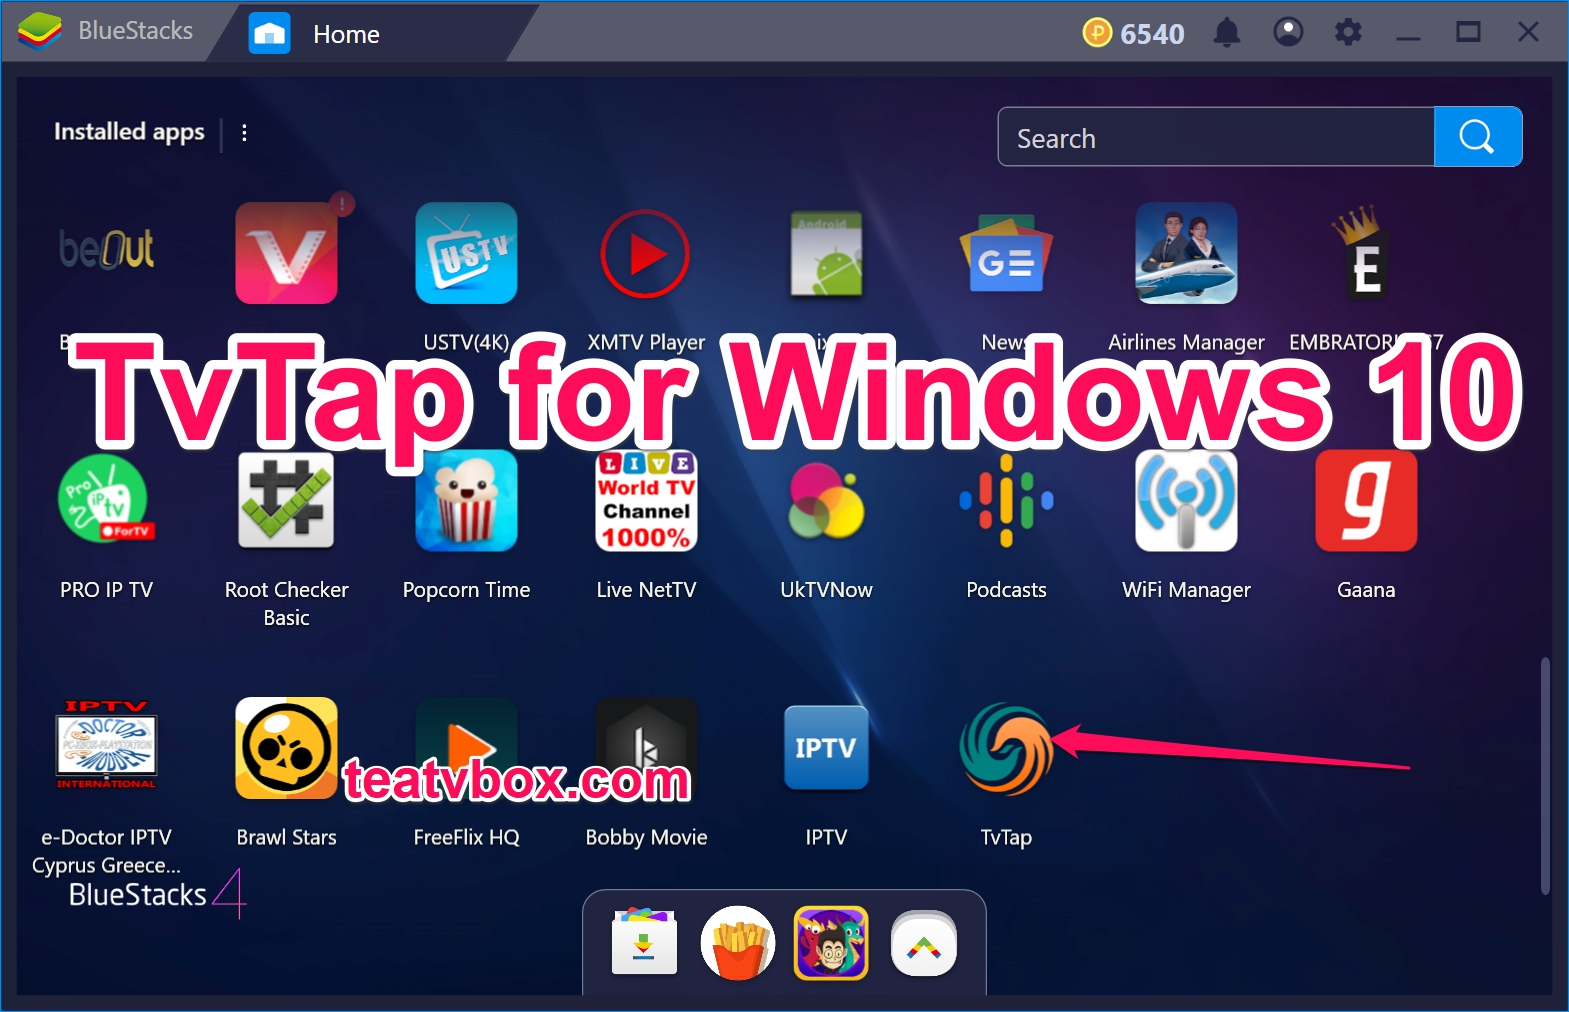 TvTap for Windows 10 PC